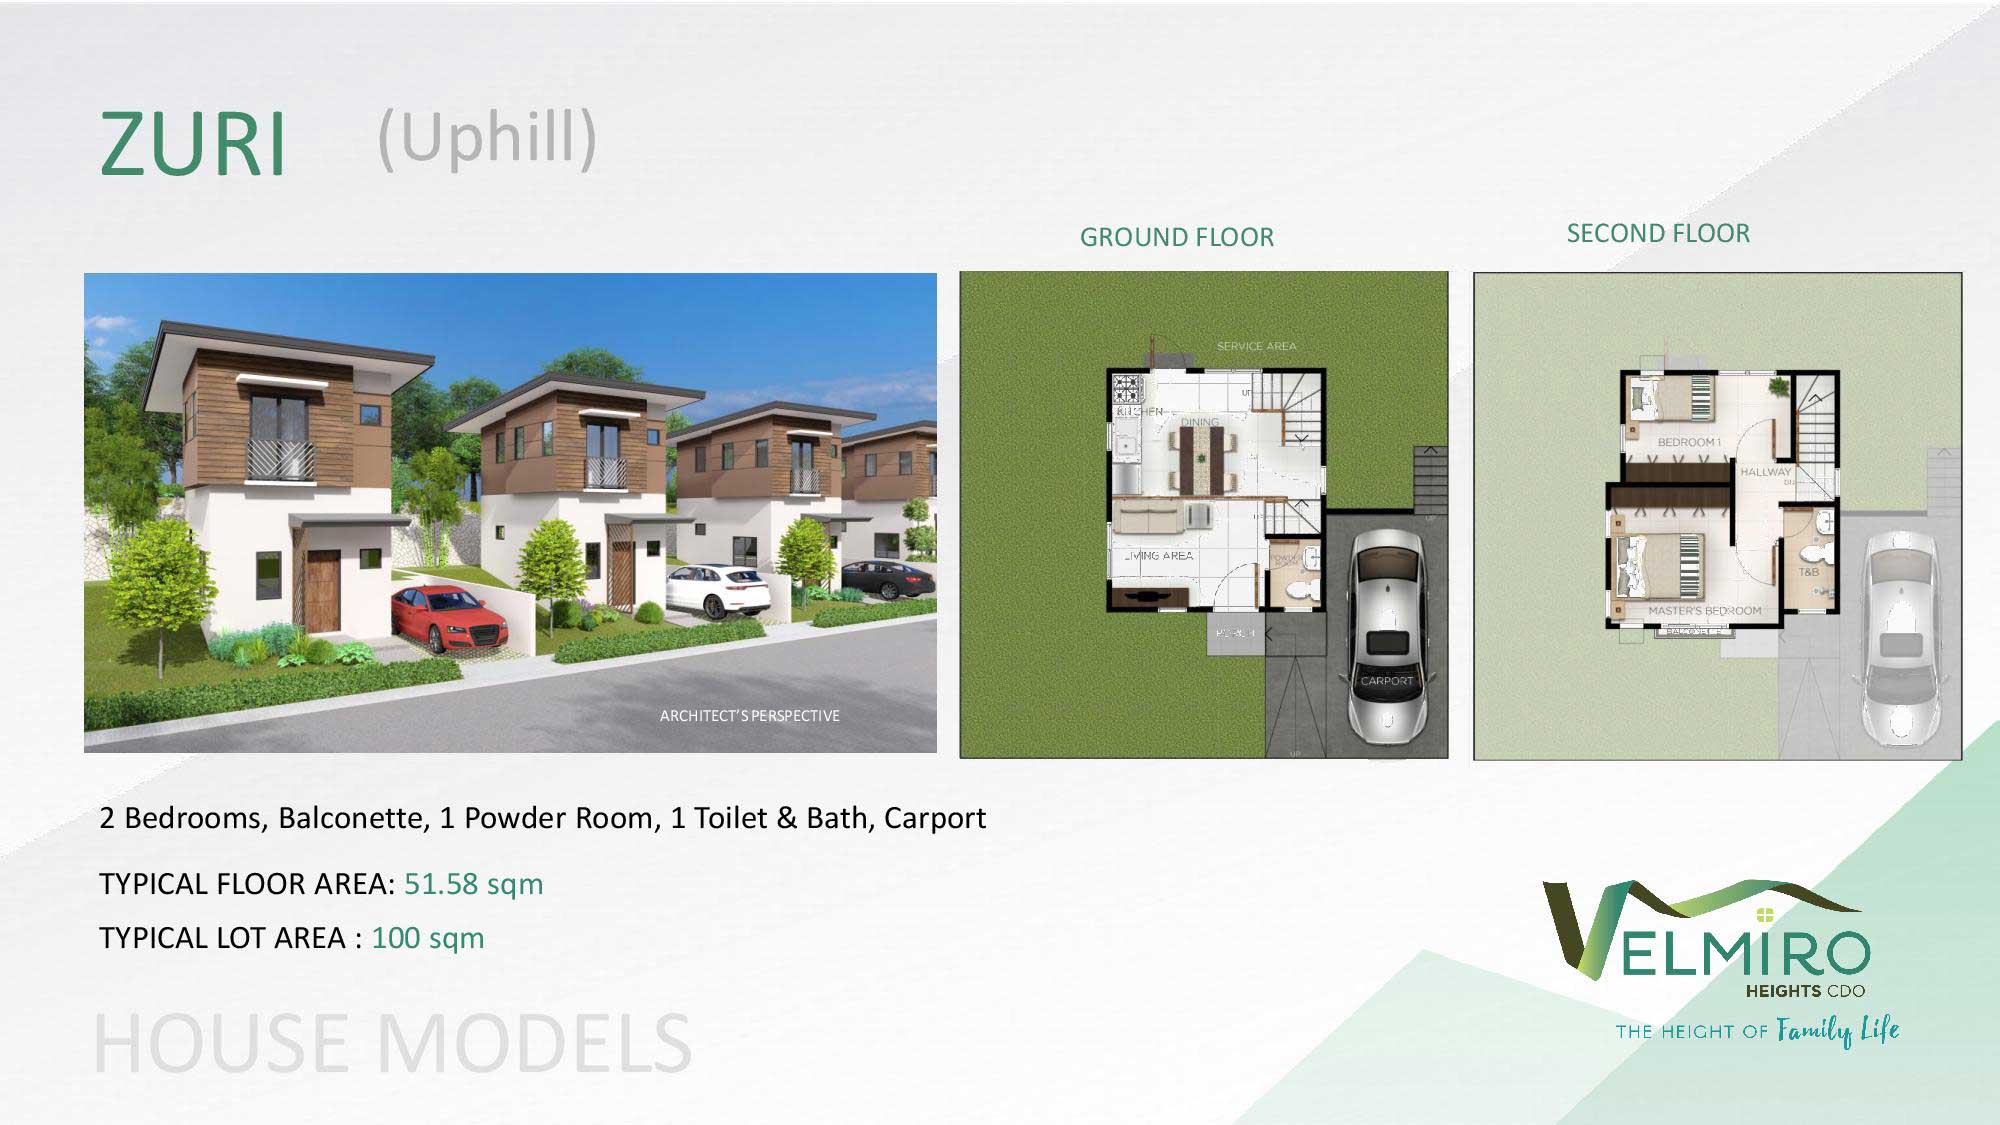 Velmiro Heights Agusan House Model Zuri Uphill web GMC